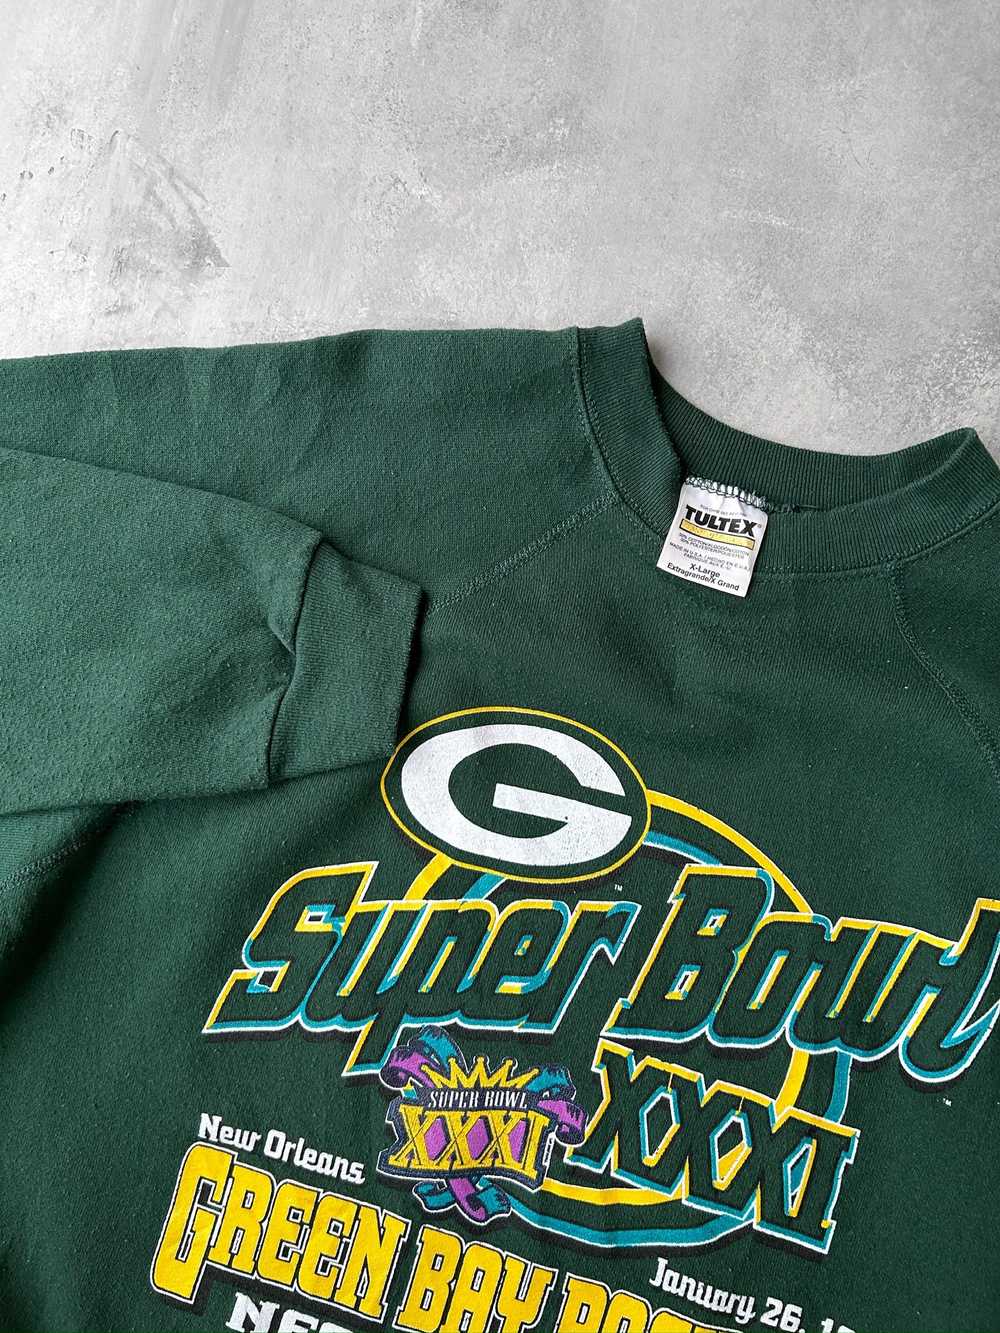 Green Bay Packers Super Bowl Sweatshirt '97 - XL - image 2